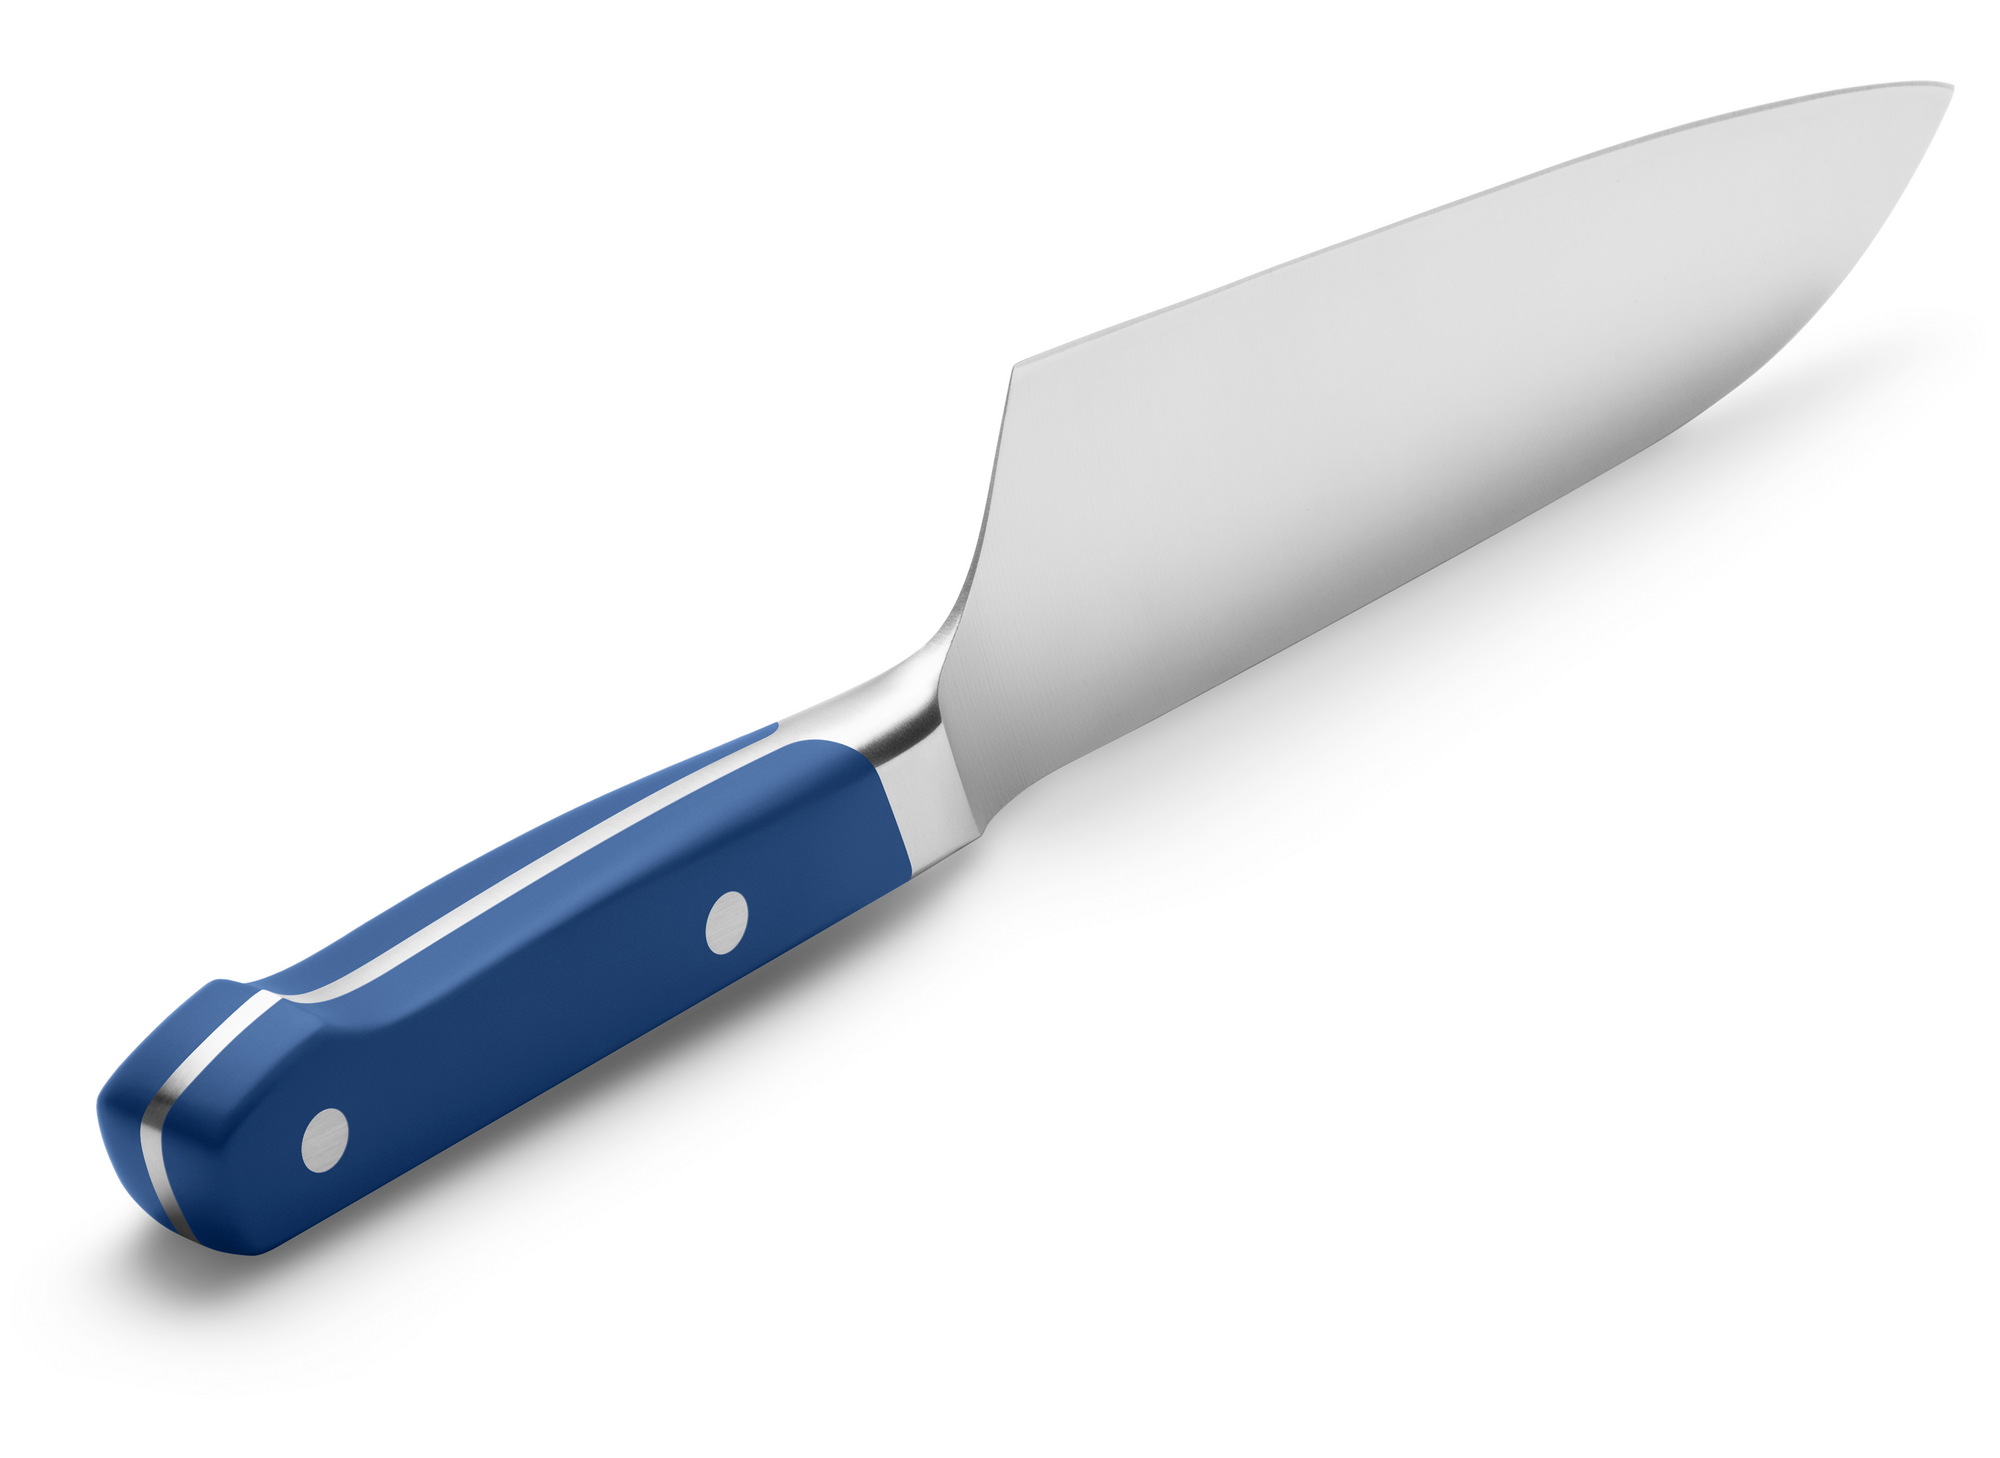 8 inch Santoku Knife